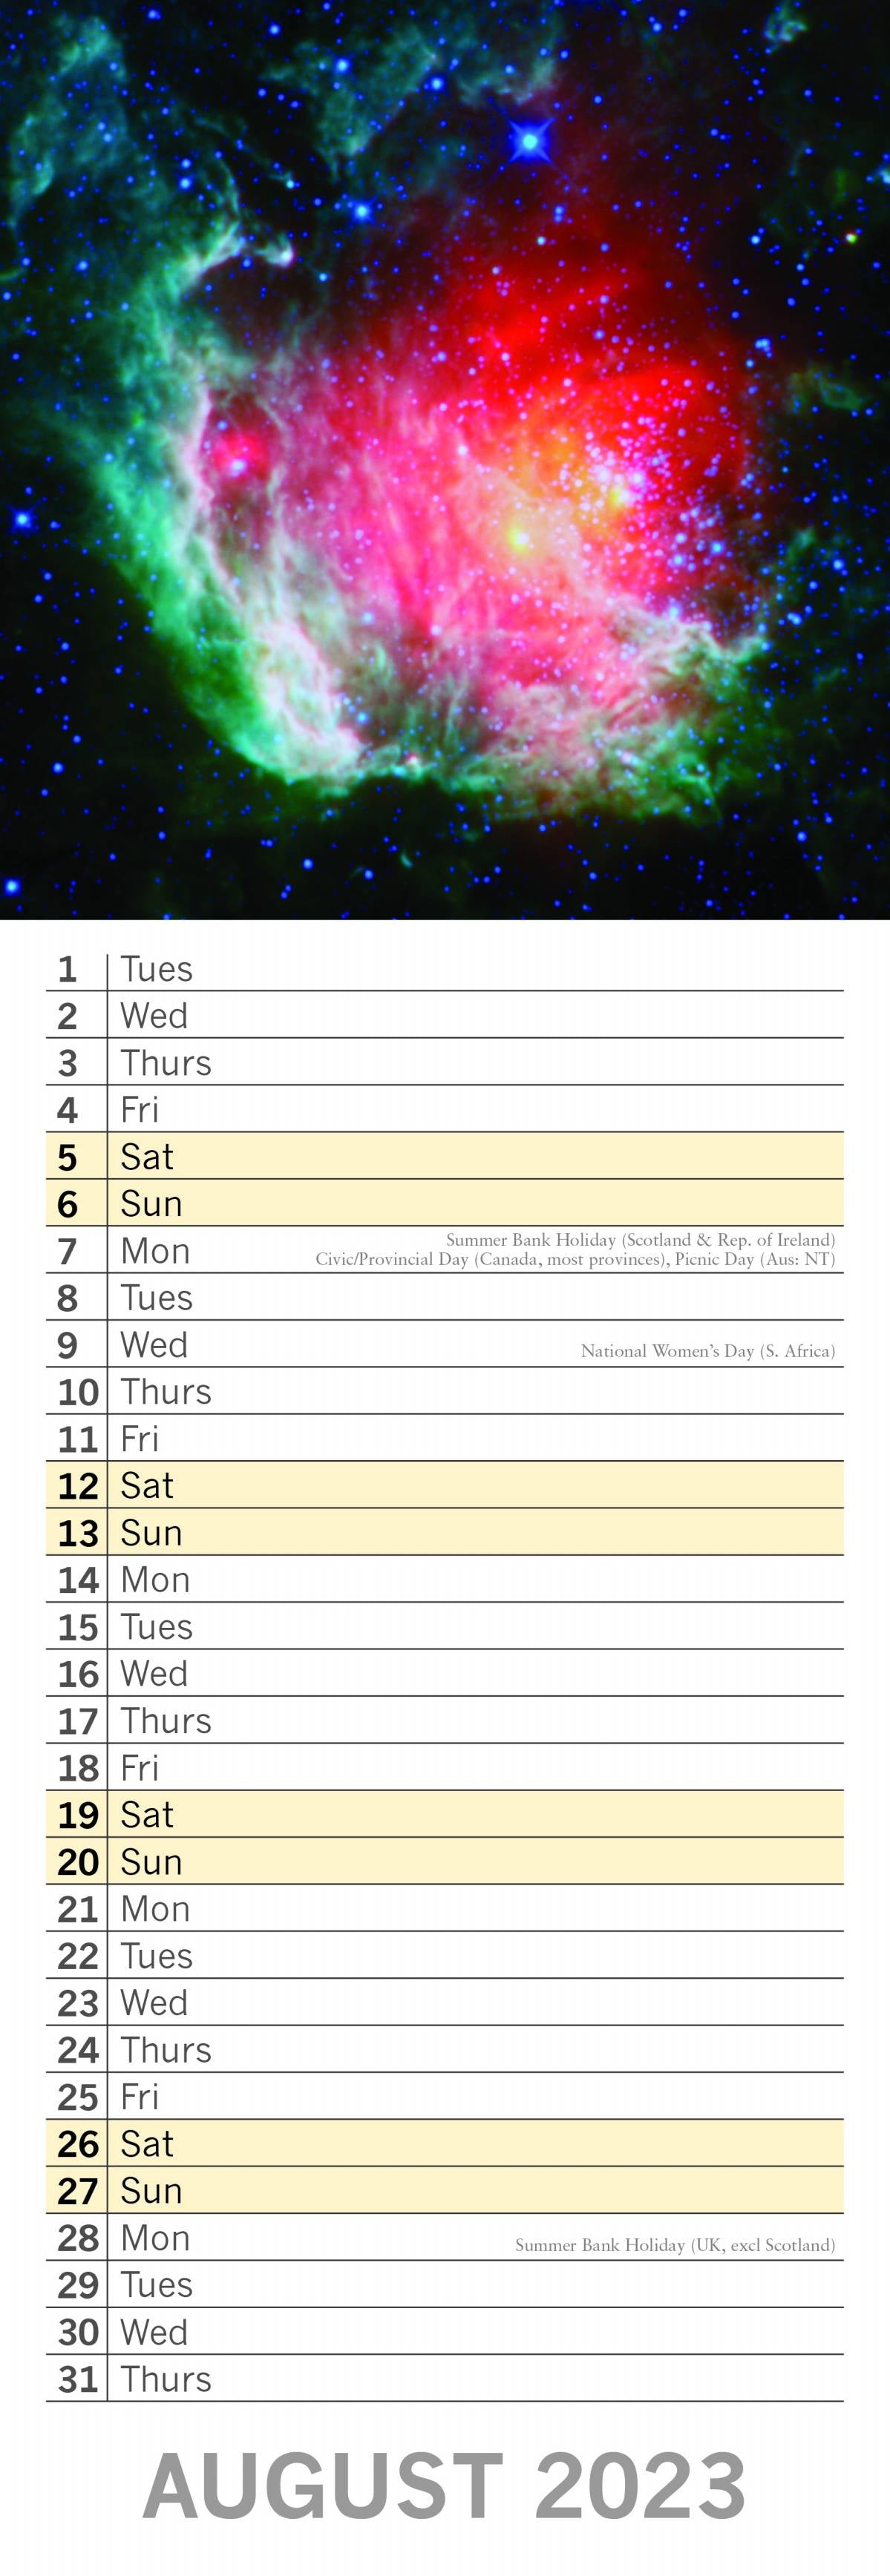 2023 Space - Slim Wall Calendar